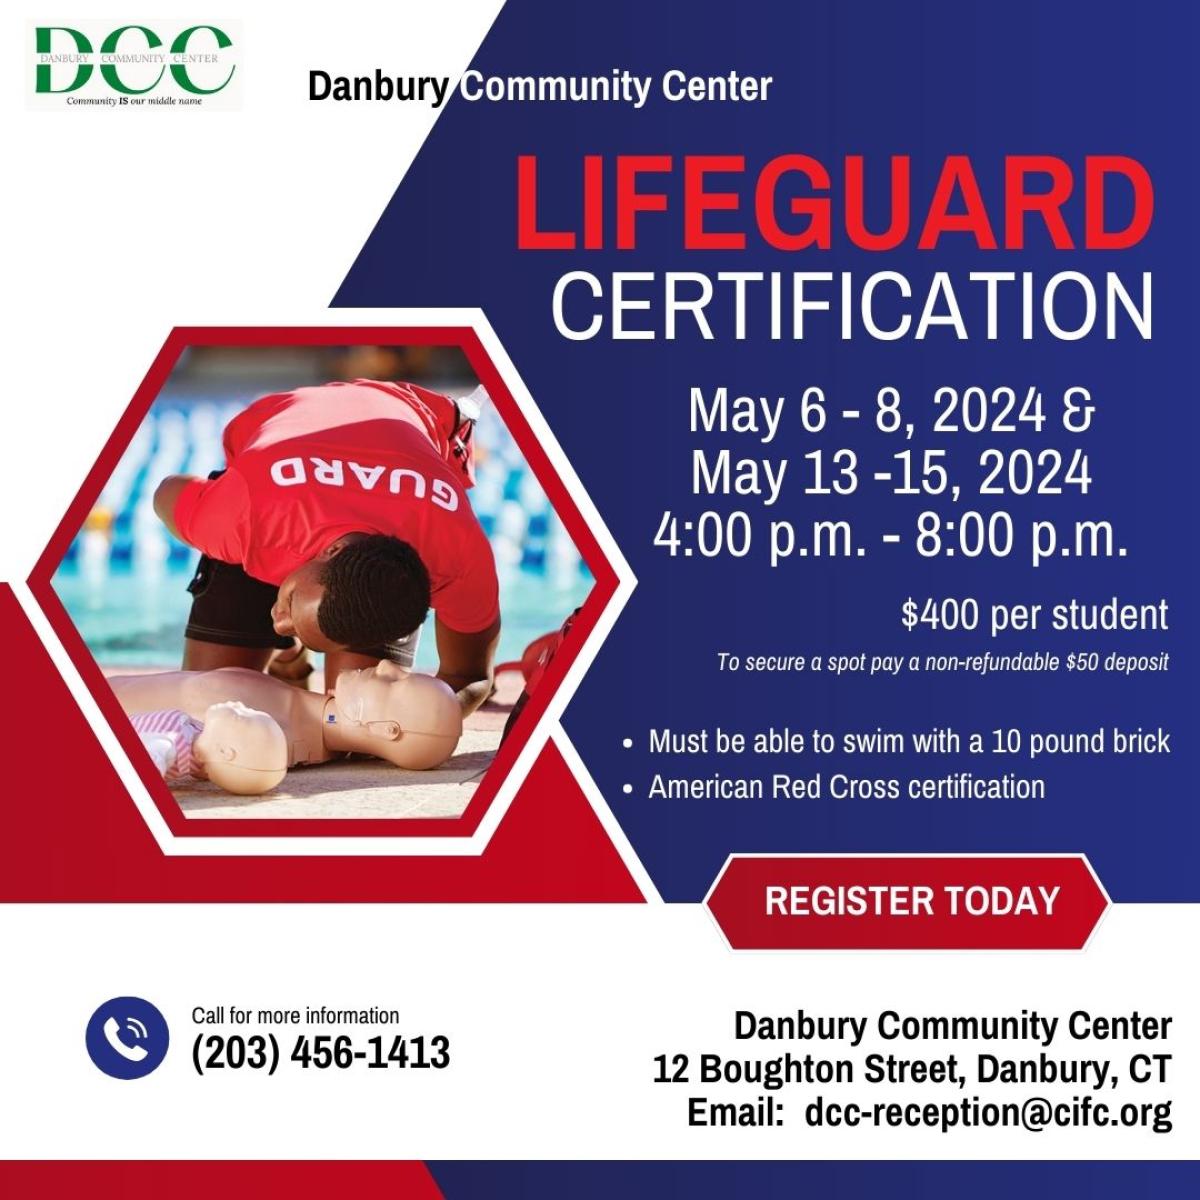 Lifeguard certification: May 6-8 and May 13-15